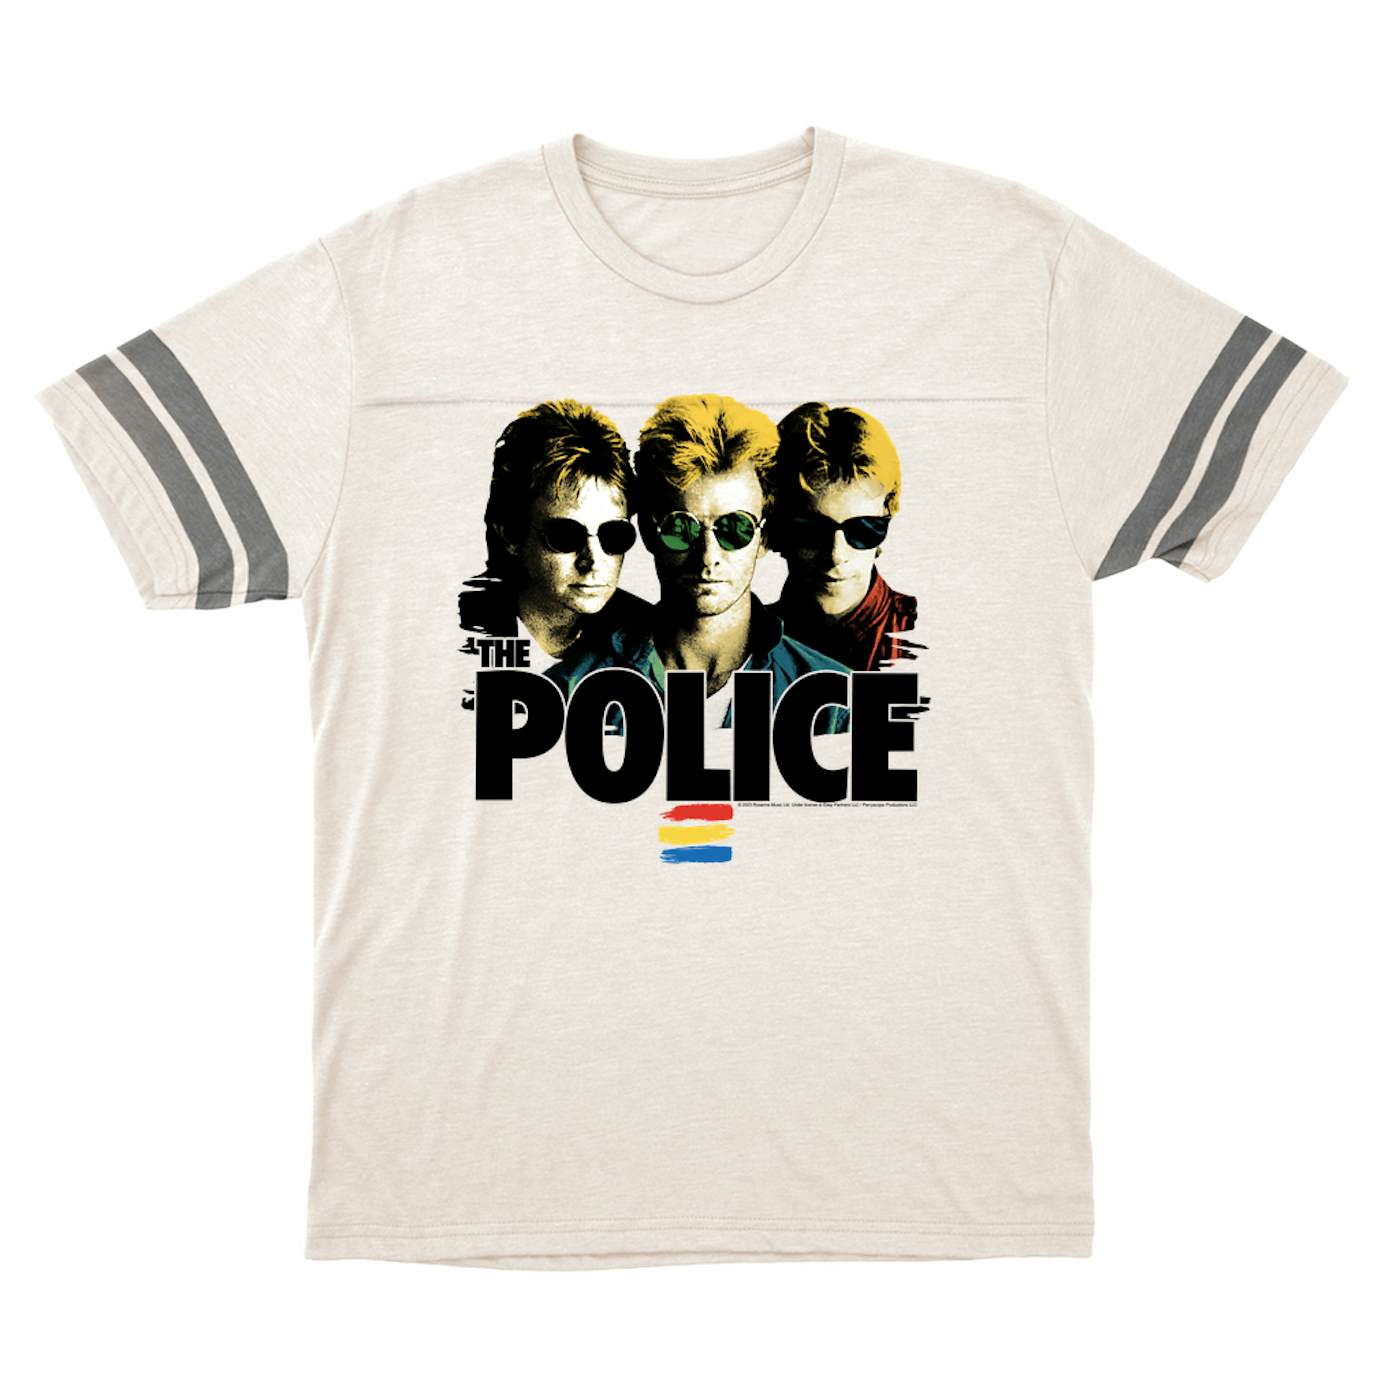 The Police T-Shirt | Synchronicity Shades Image (Merchbar